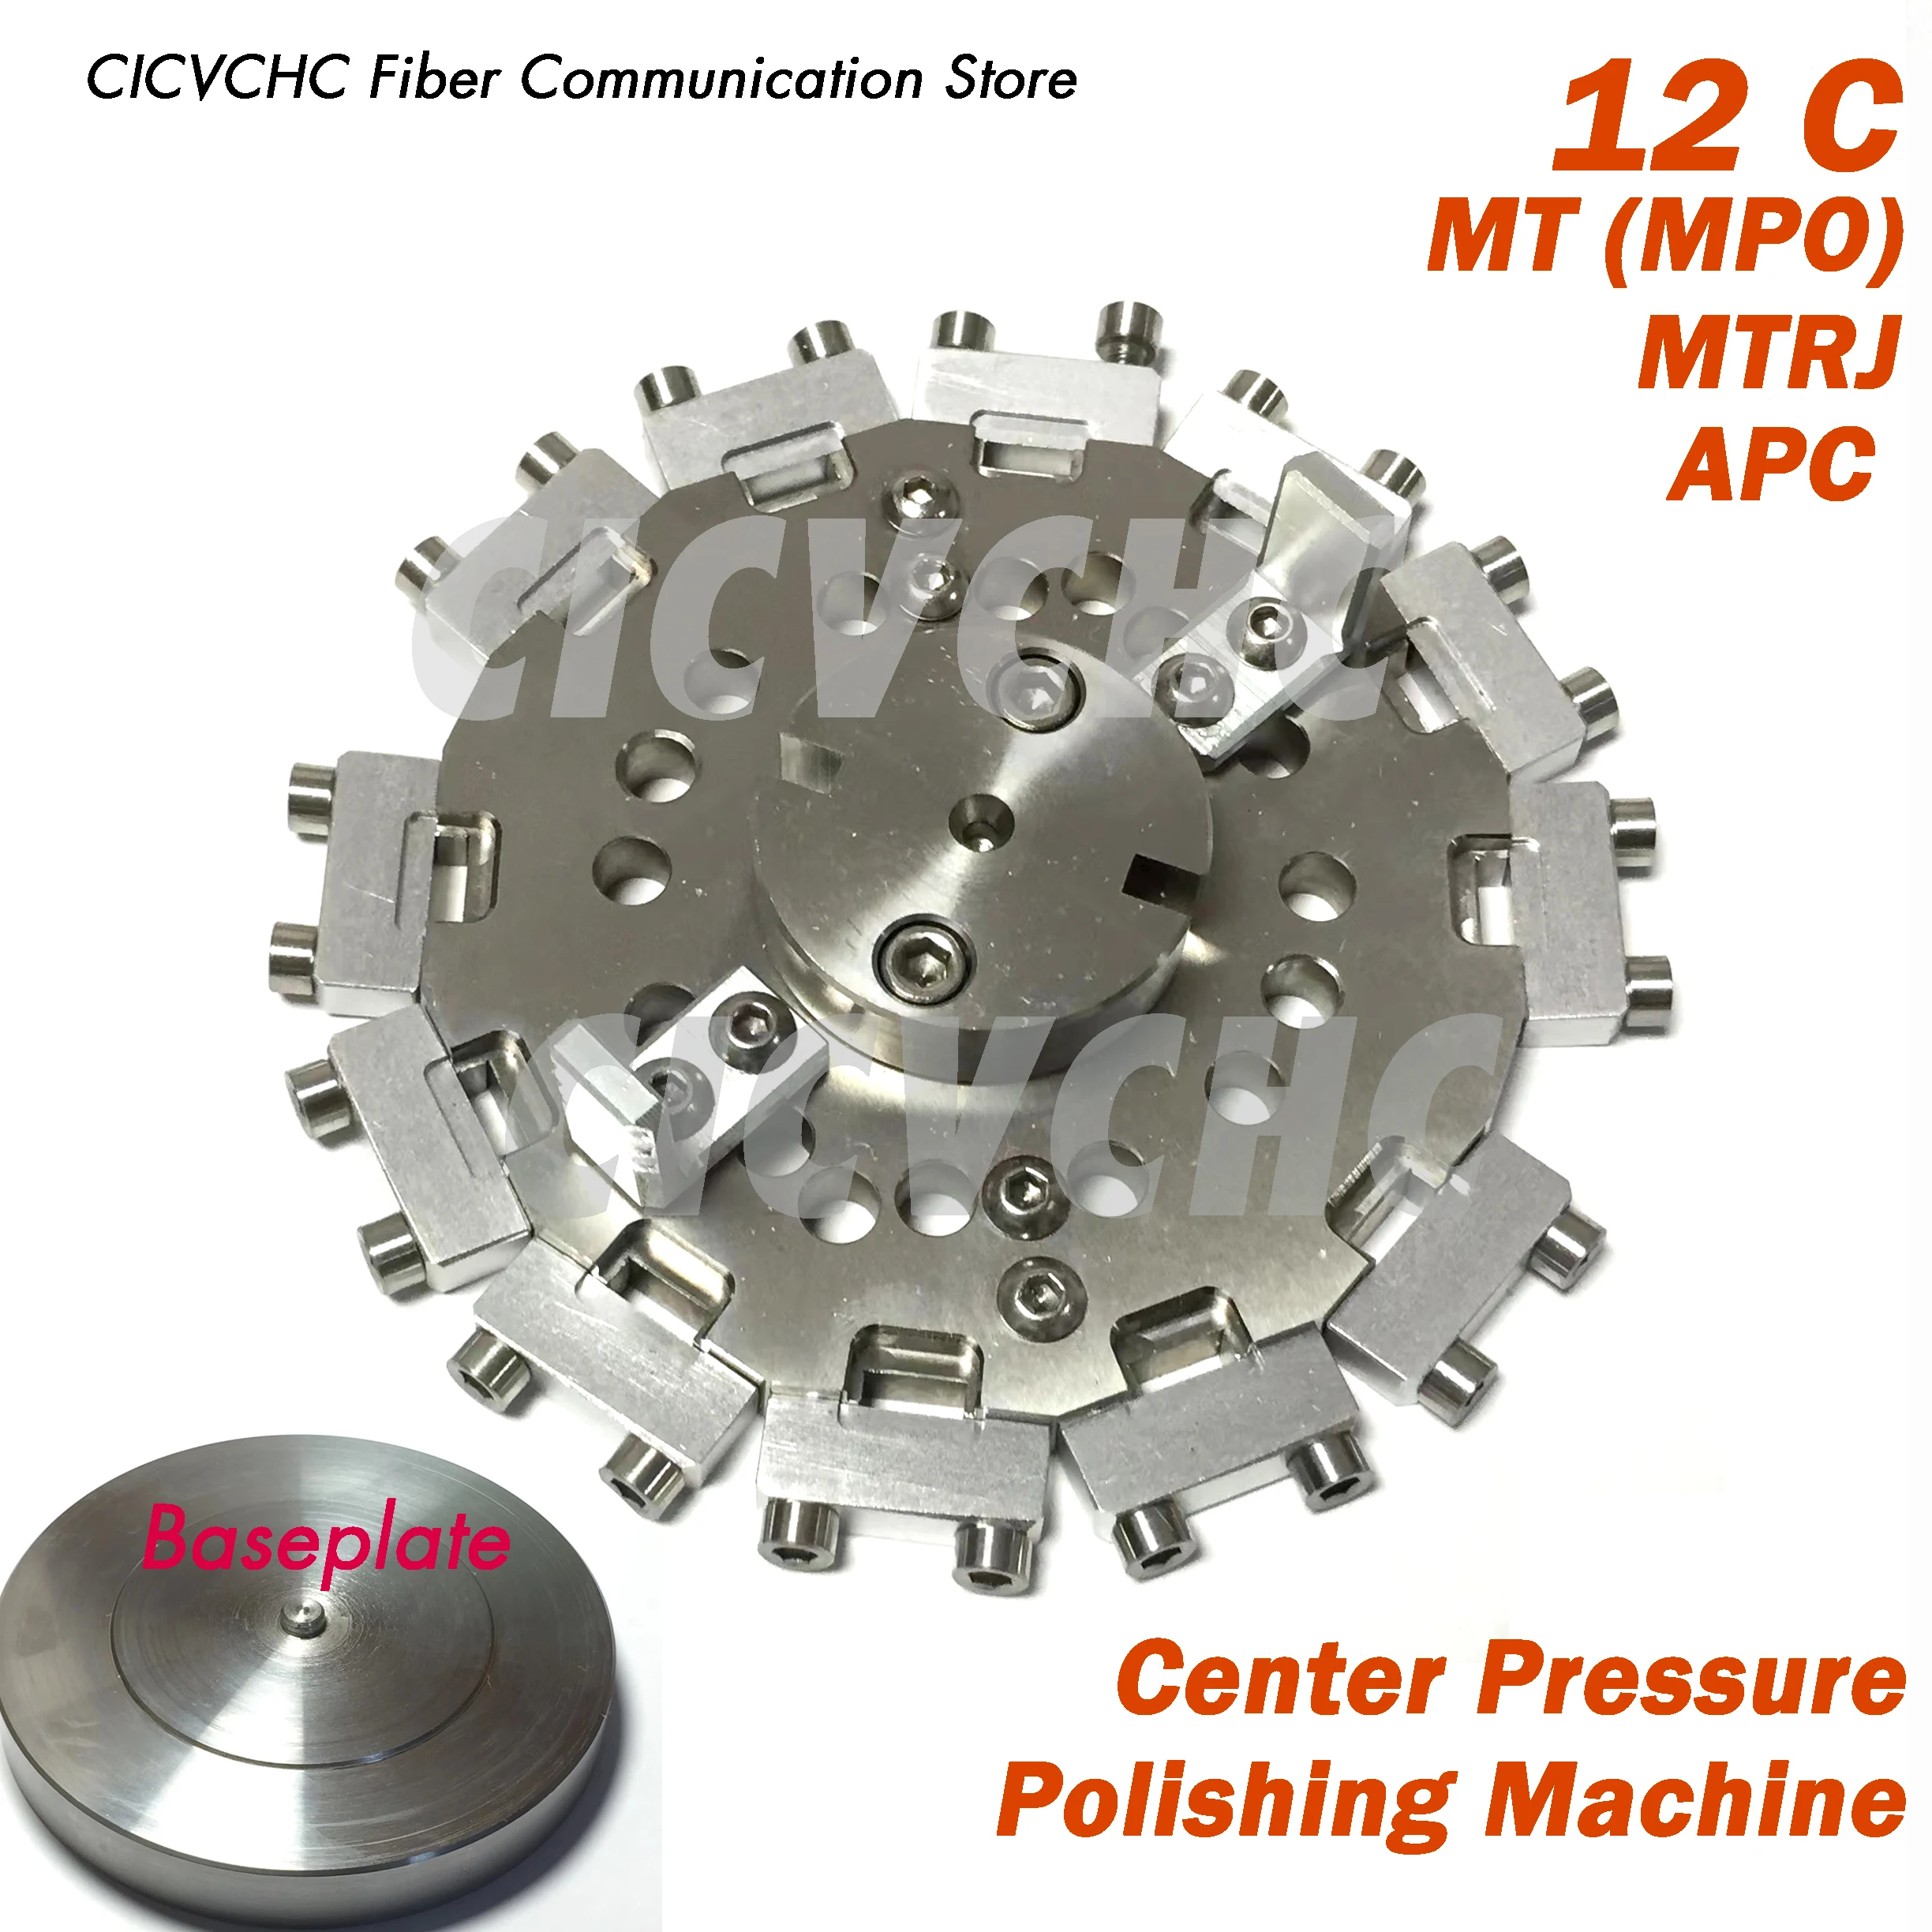 

12C MT Ferrule (MPO) or MTRJ APC Polishing Jig for Center Pressure Polishing Machine